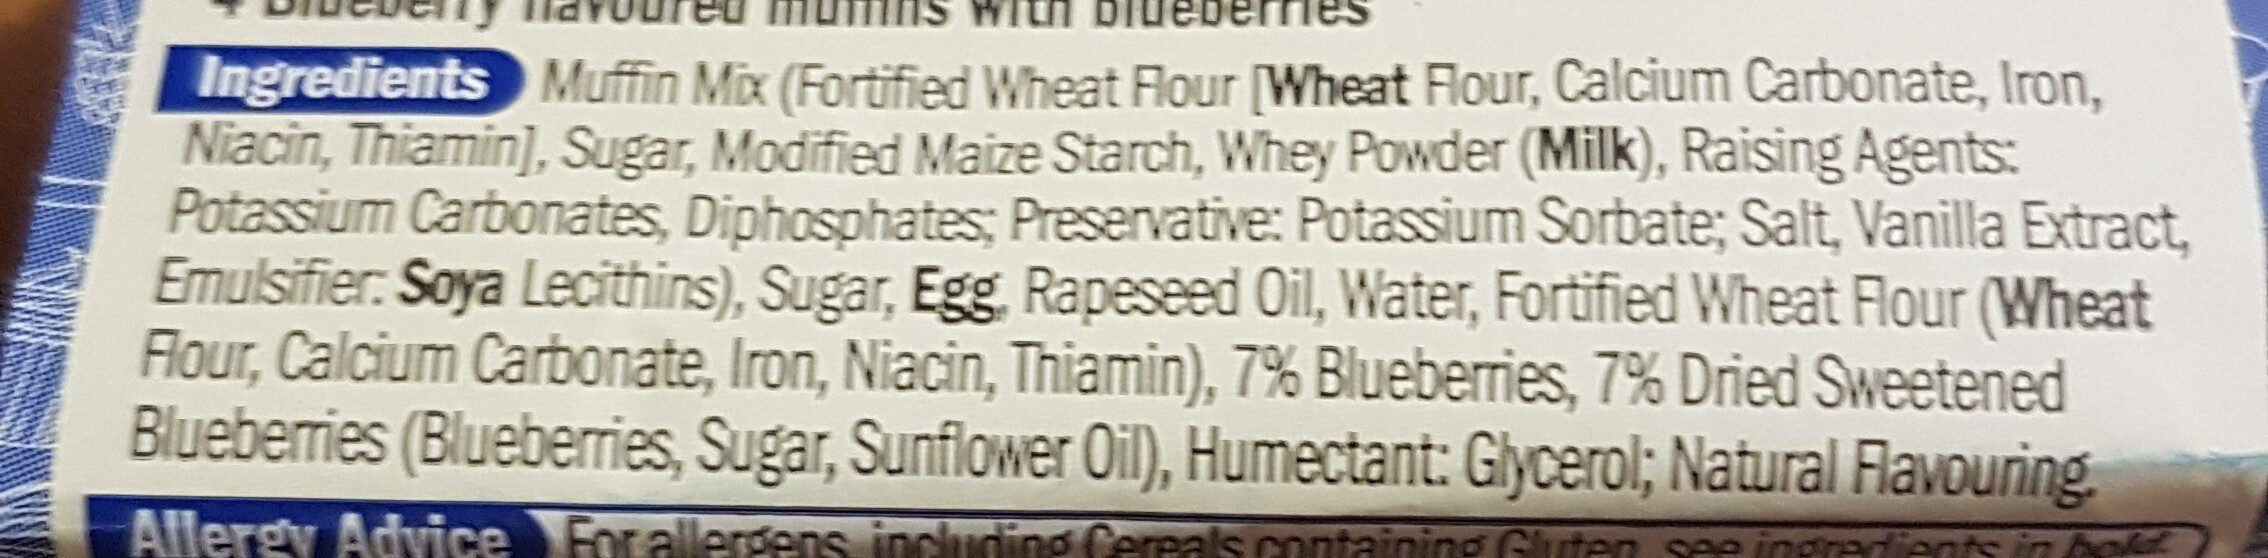 Blueberry muffins - Ingredients